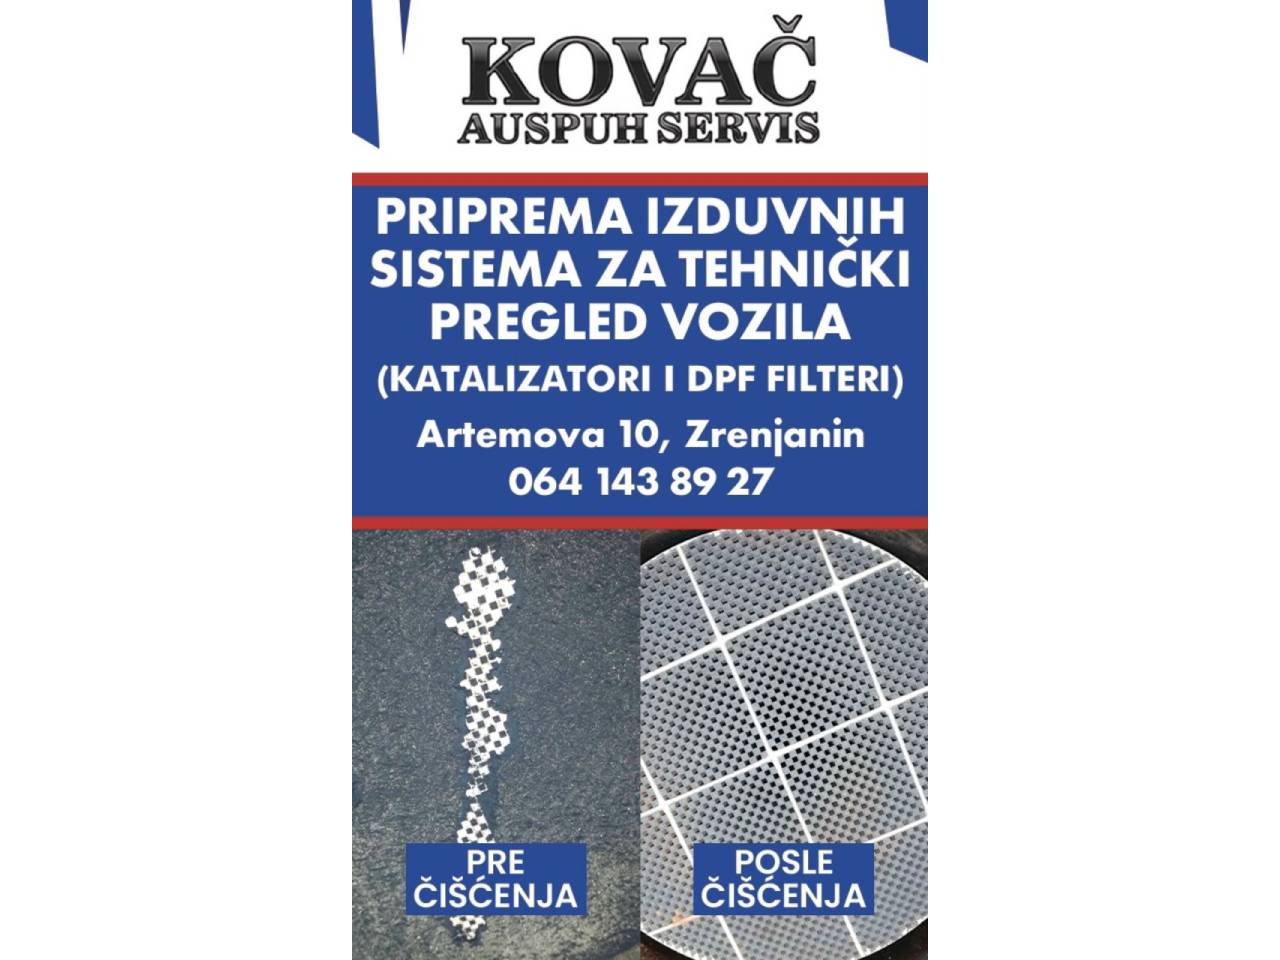 Photo 1 - EXHAUST PIPE SERVICE KOVAC - Exhaust services, Zrenjanin